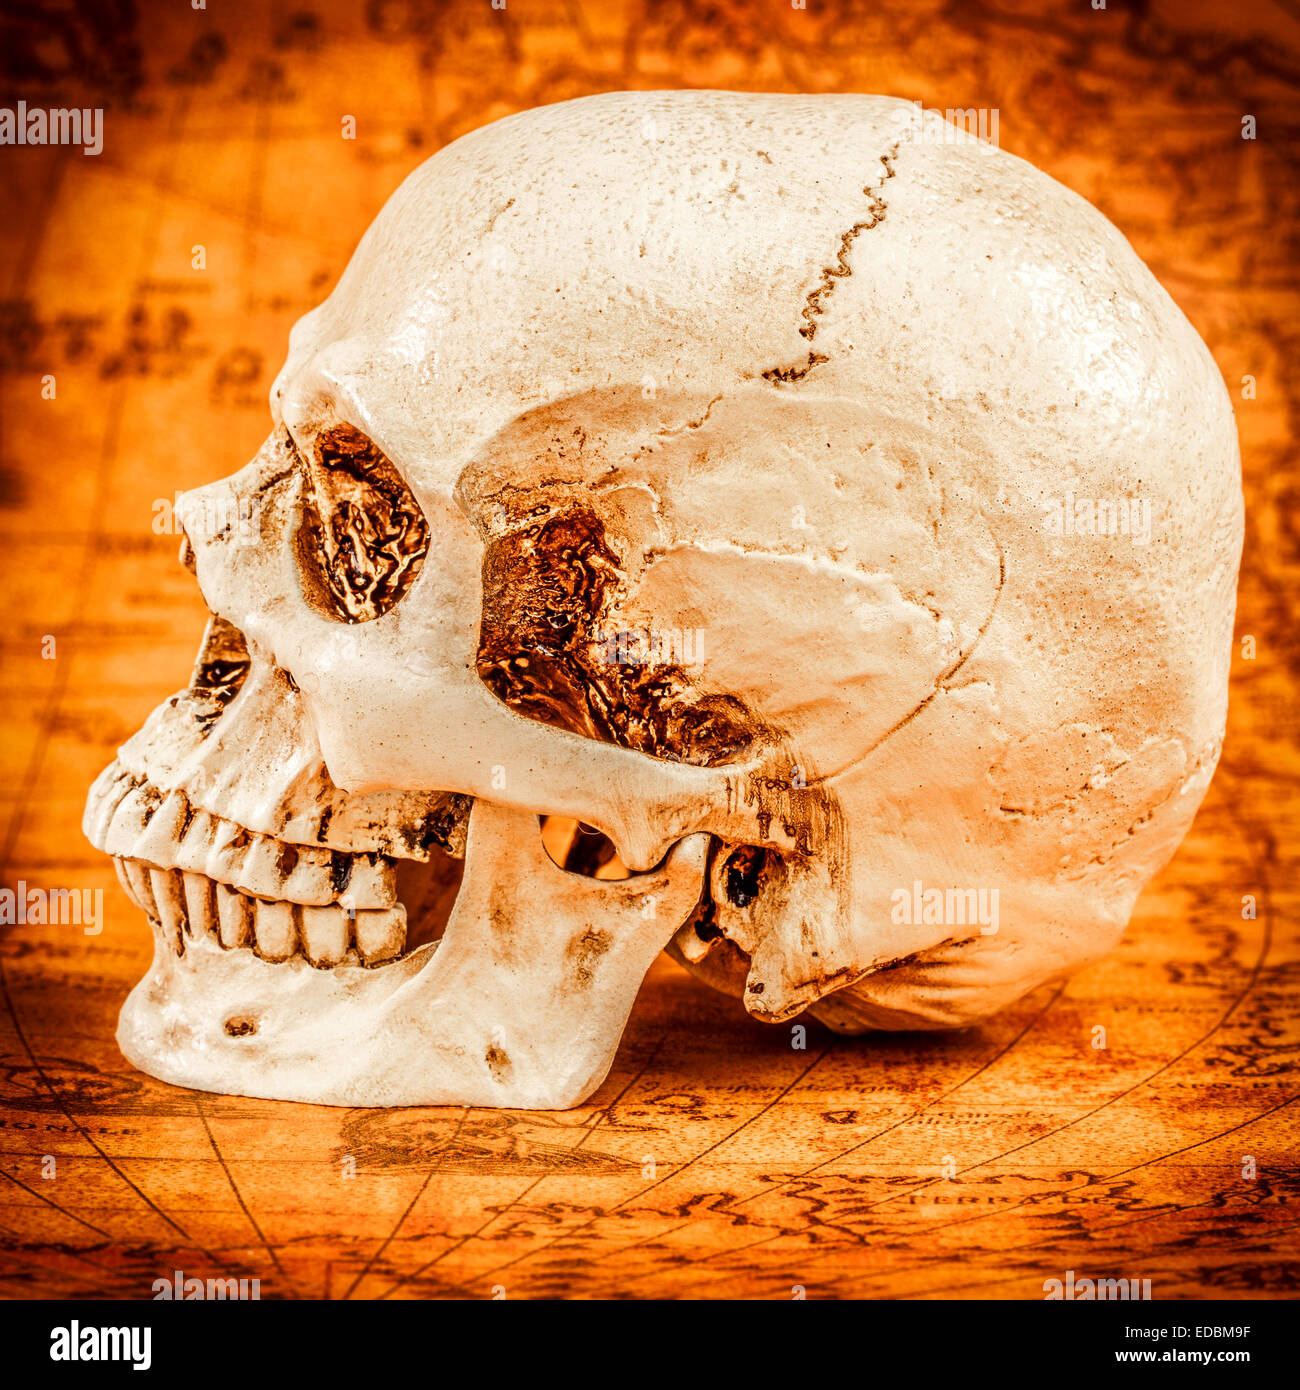 Human skull on old map Stock Photo